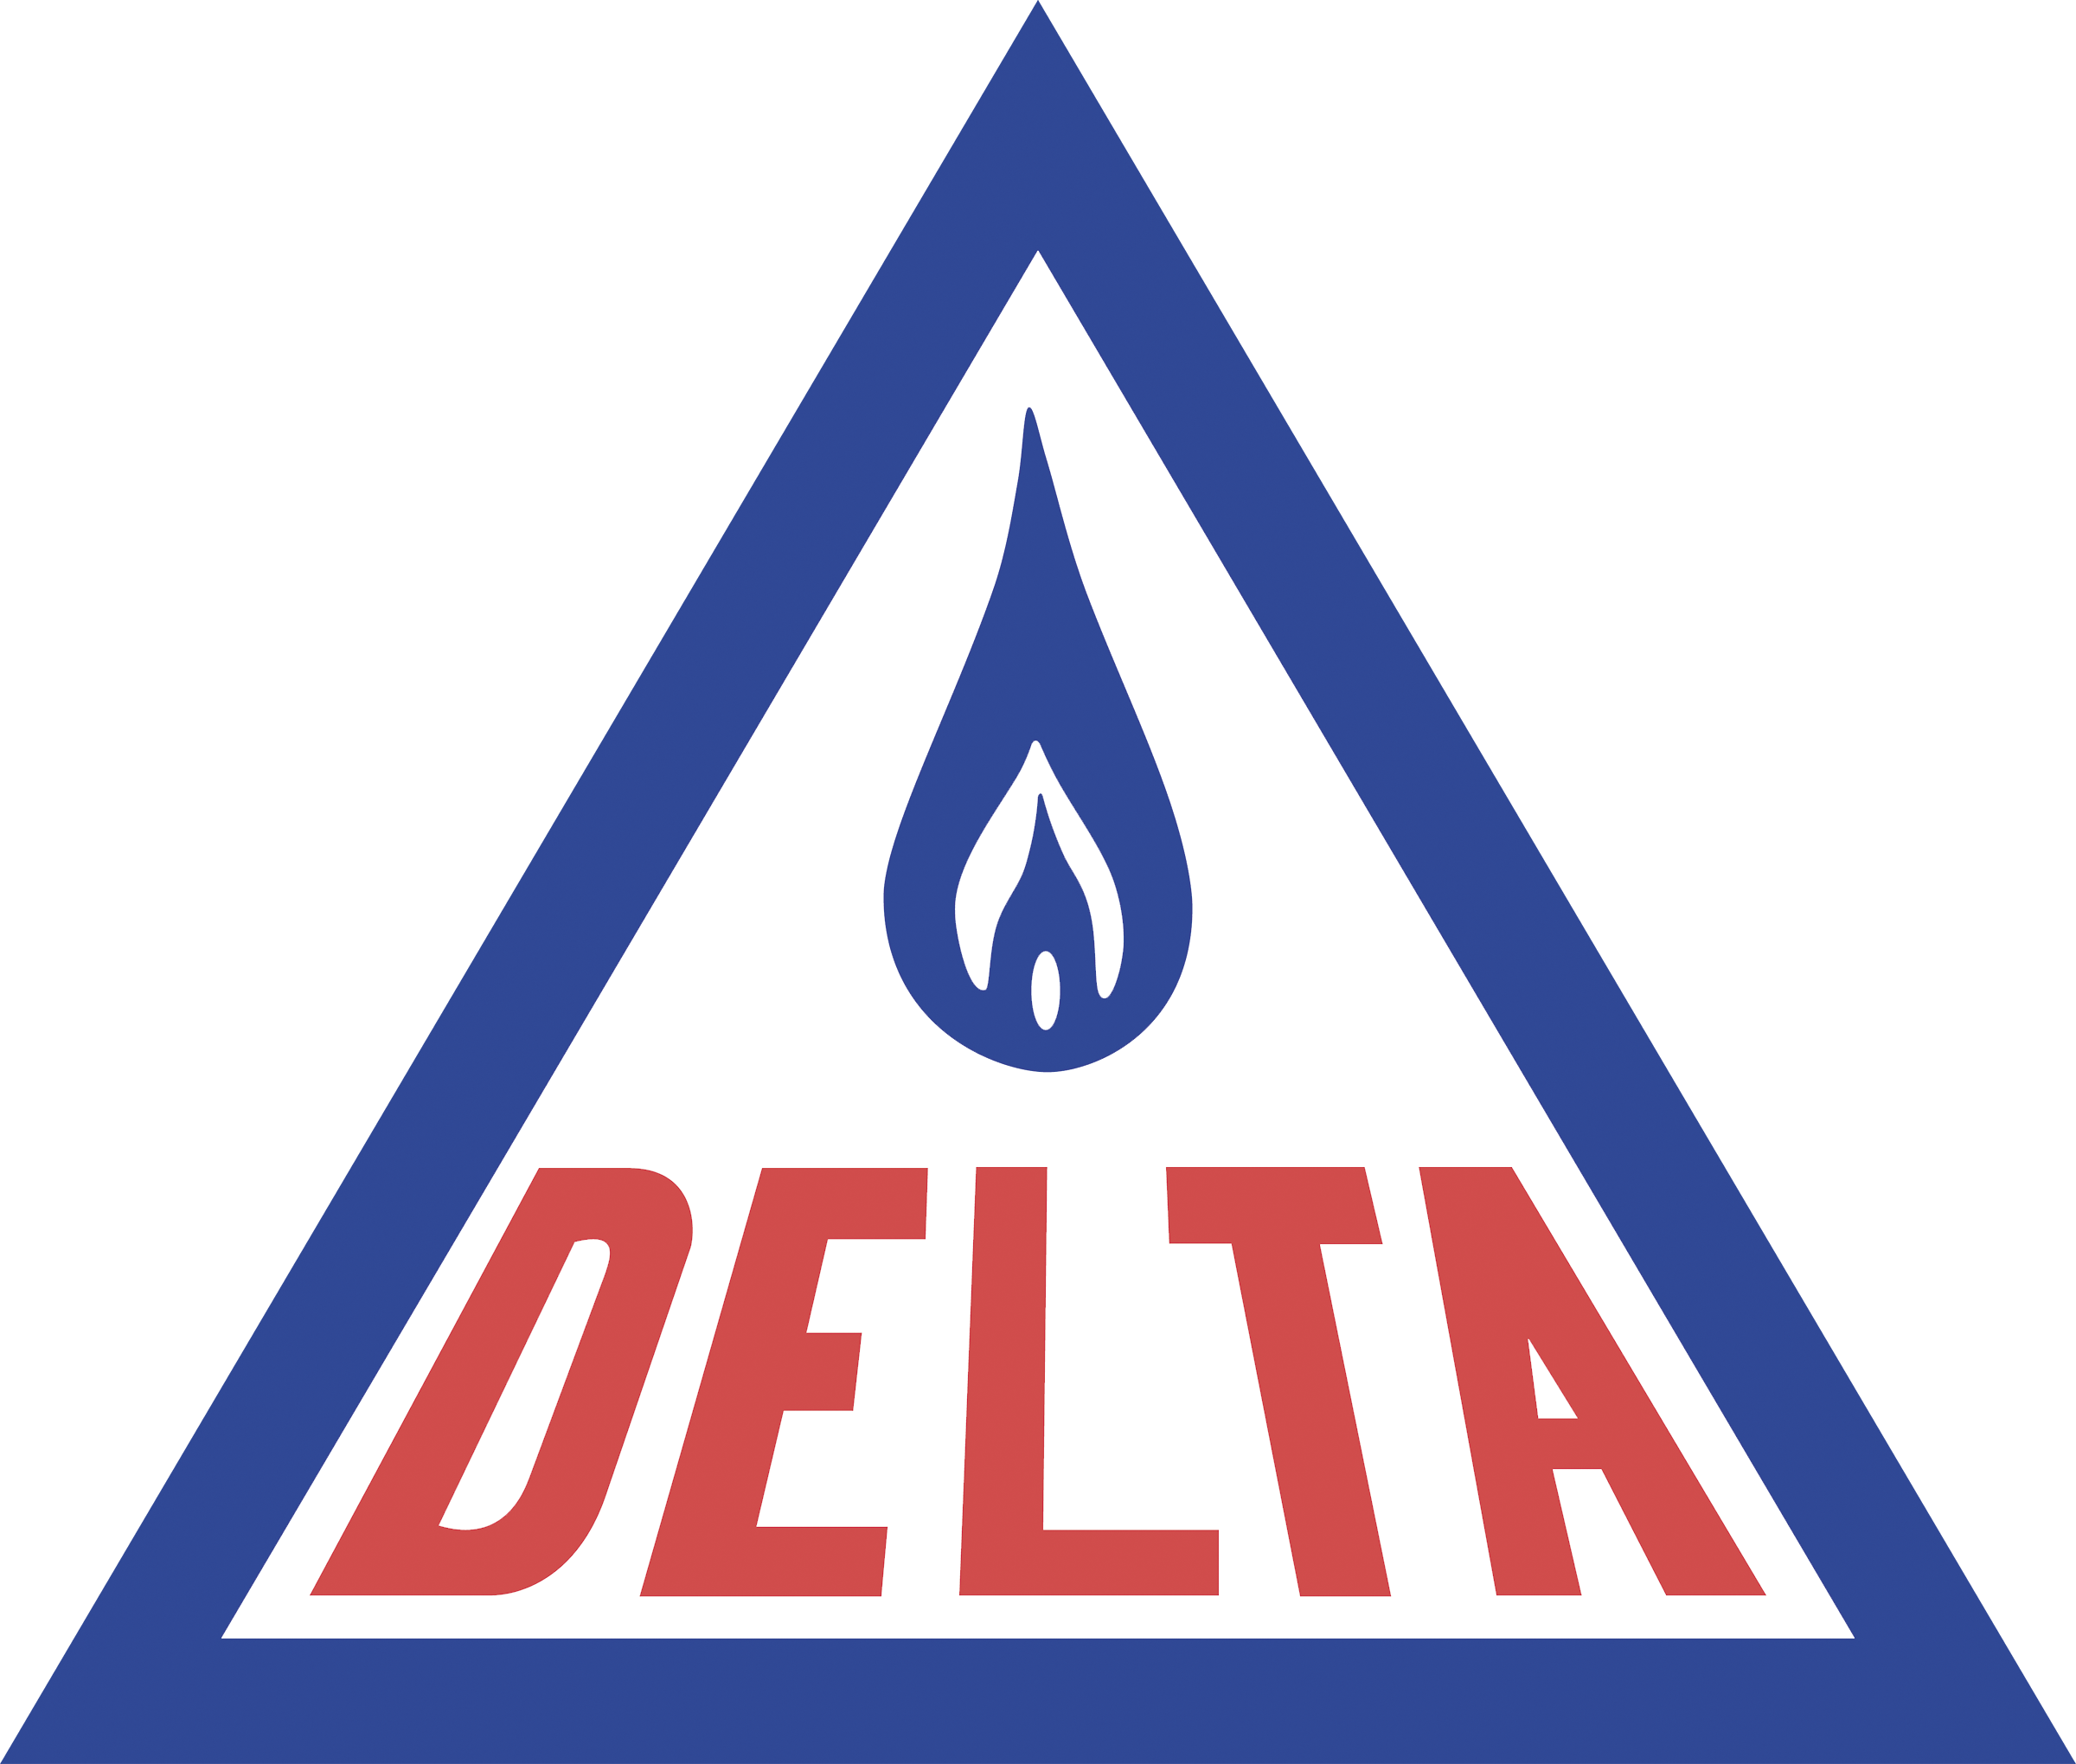 san fransisco delta season ticket holders png logo #4197